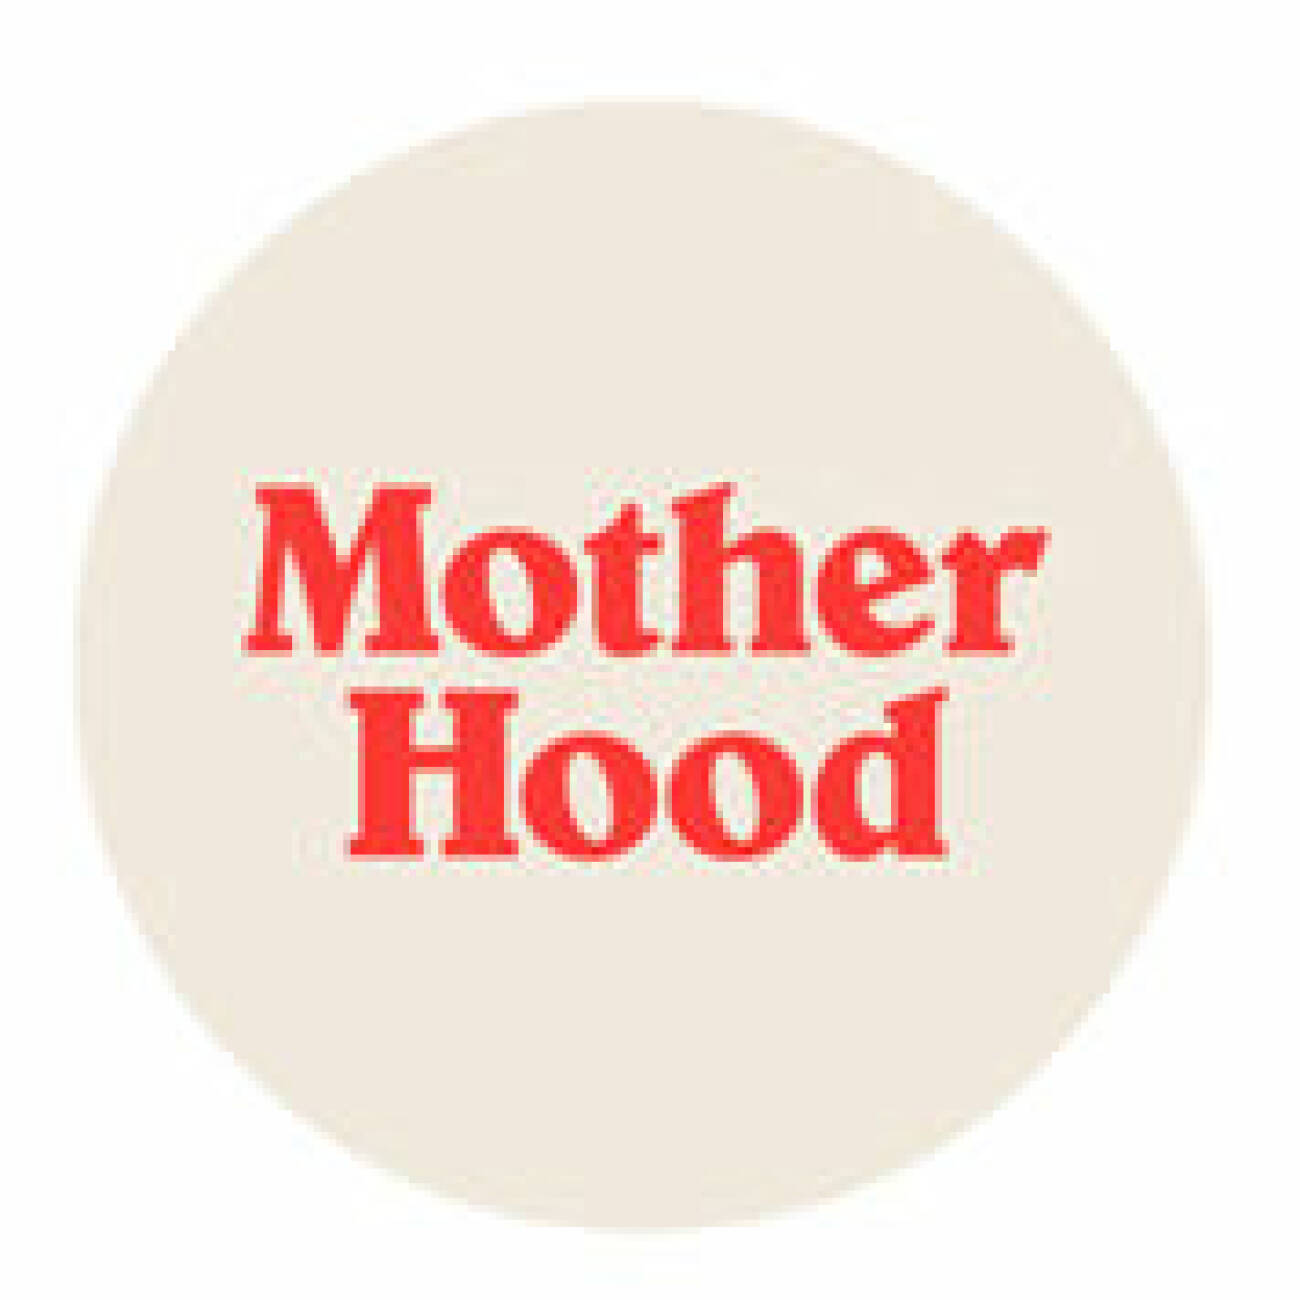 https://image.motherhood.se/redaktionen-cirkel.jpg.jpg?imageId=2581249&x=0&y=0&cropw=100&croph=100&width=1318&height=1318